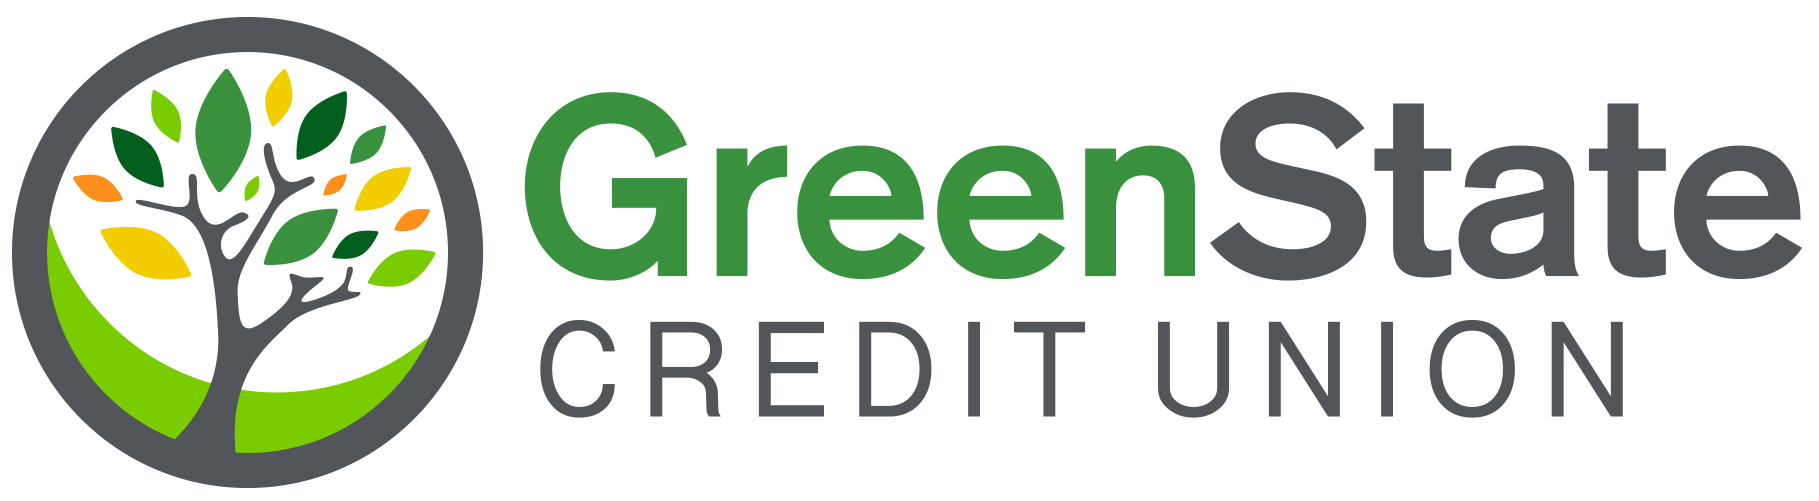 Greenstate logo